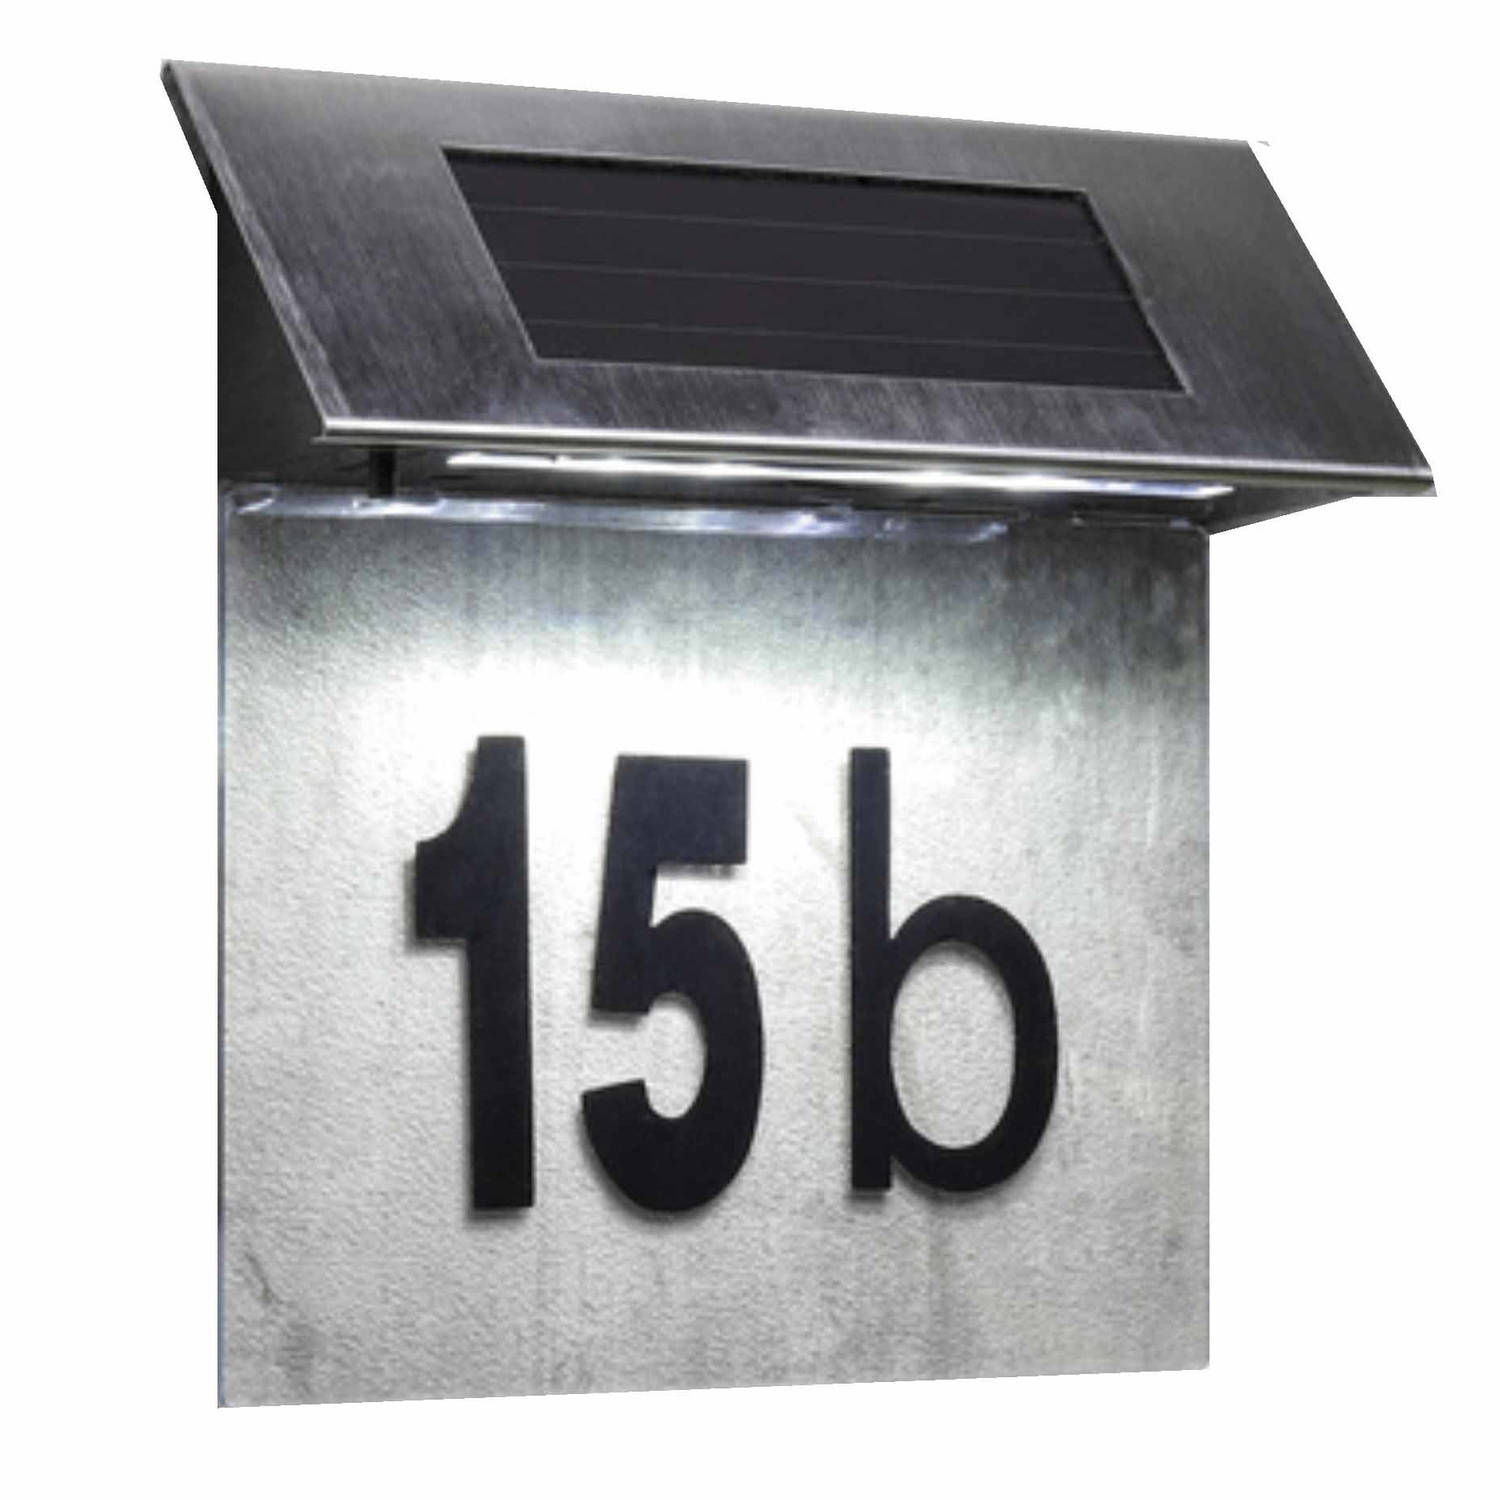 Transparante Solar Huisnummer Plaat Met Led Licht Huisnummerplaten-Huisnummerbordjes